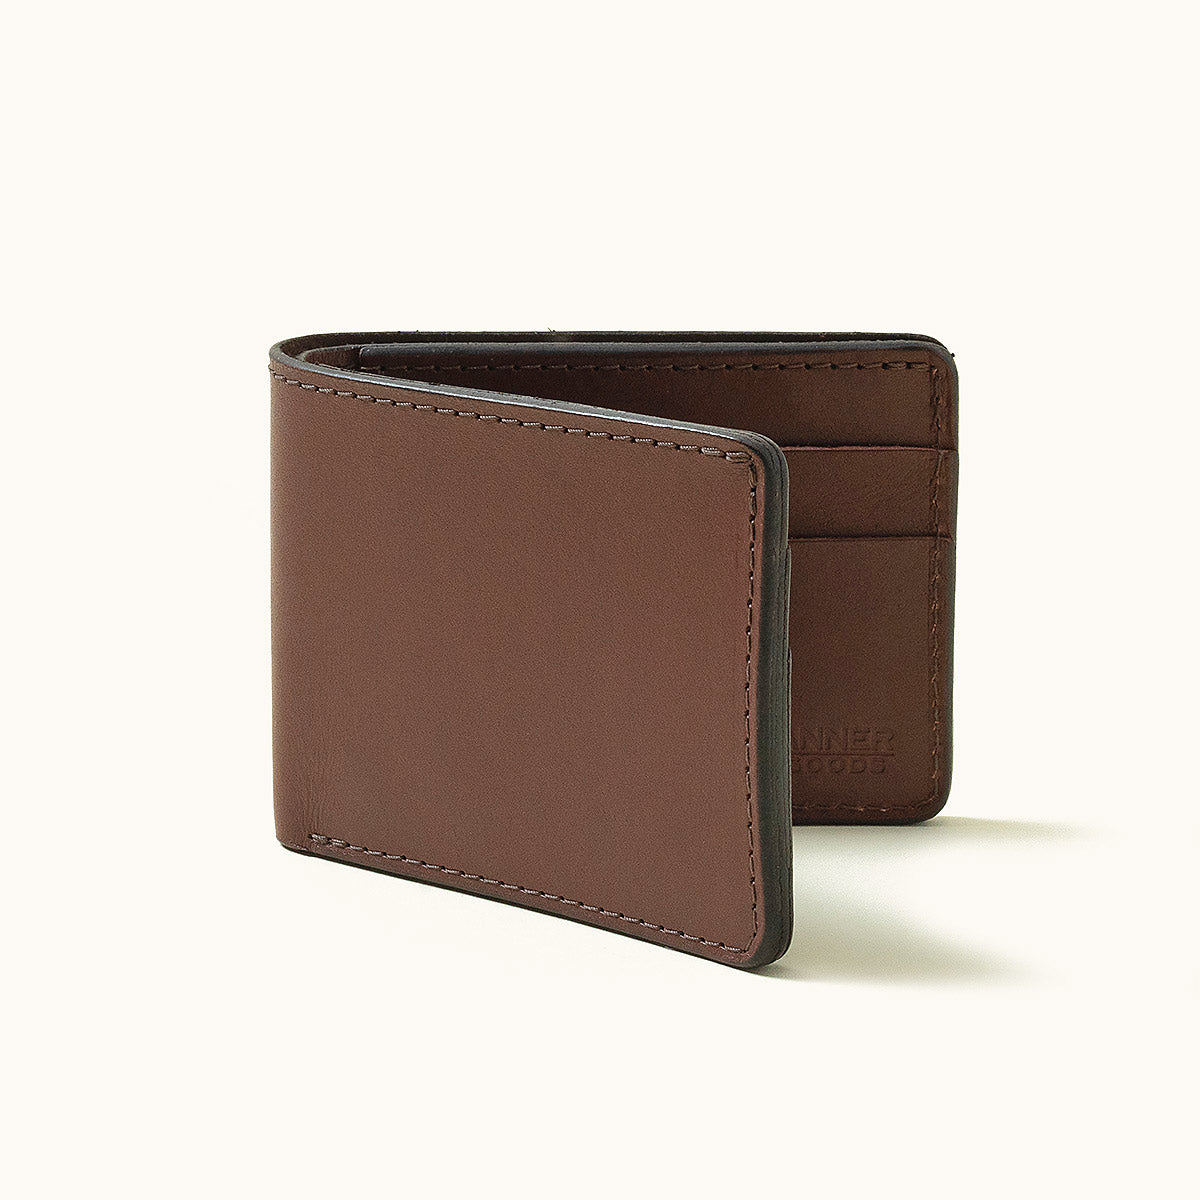 Cognac leather bifold wallet